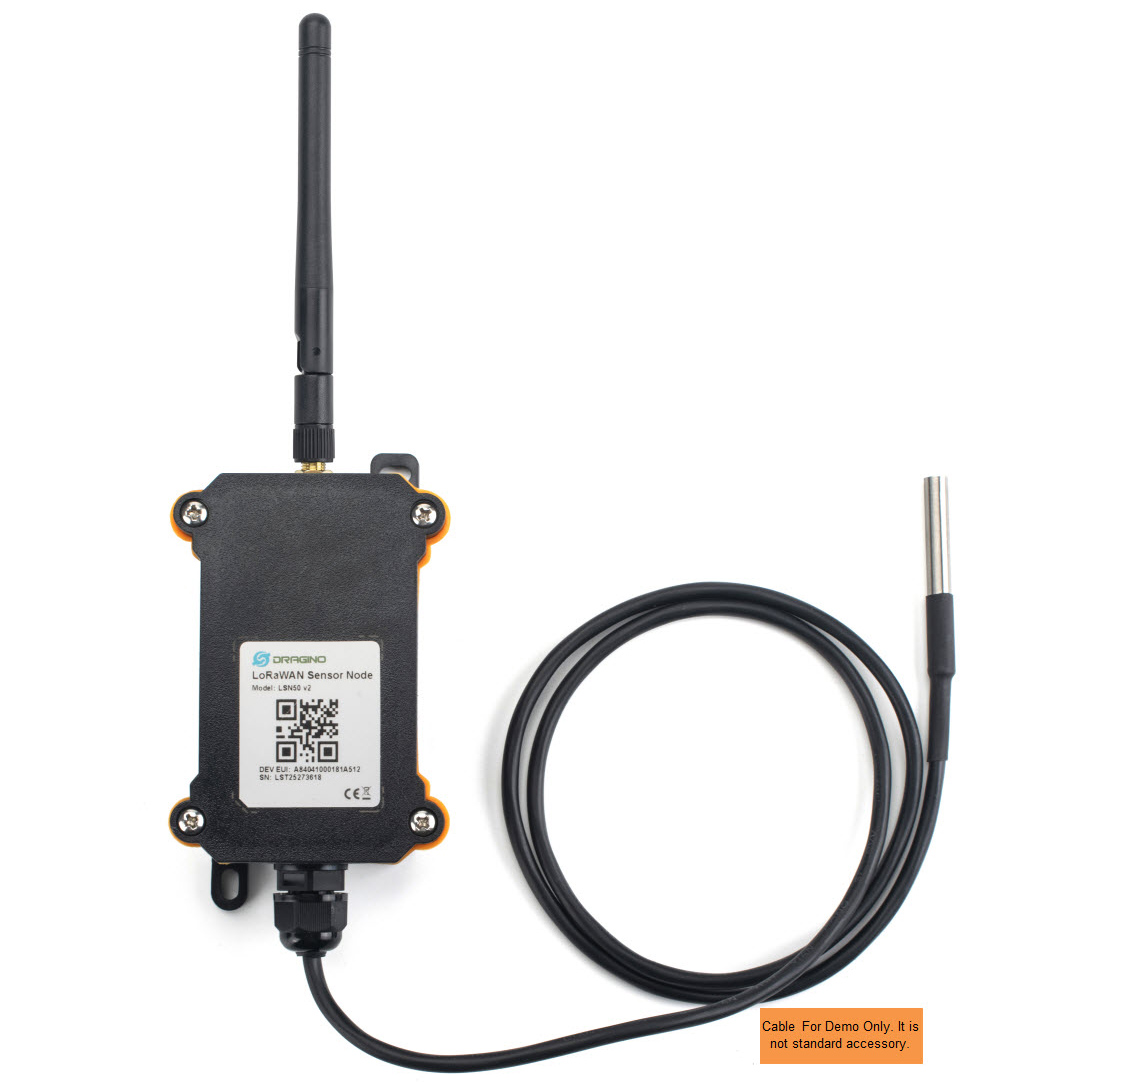 Dragino LSN50-V2 Waterproof Long Range Wireless LoRa Sensor Node (868 MHz) - Click to Enlarge